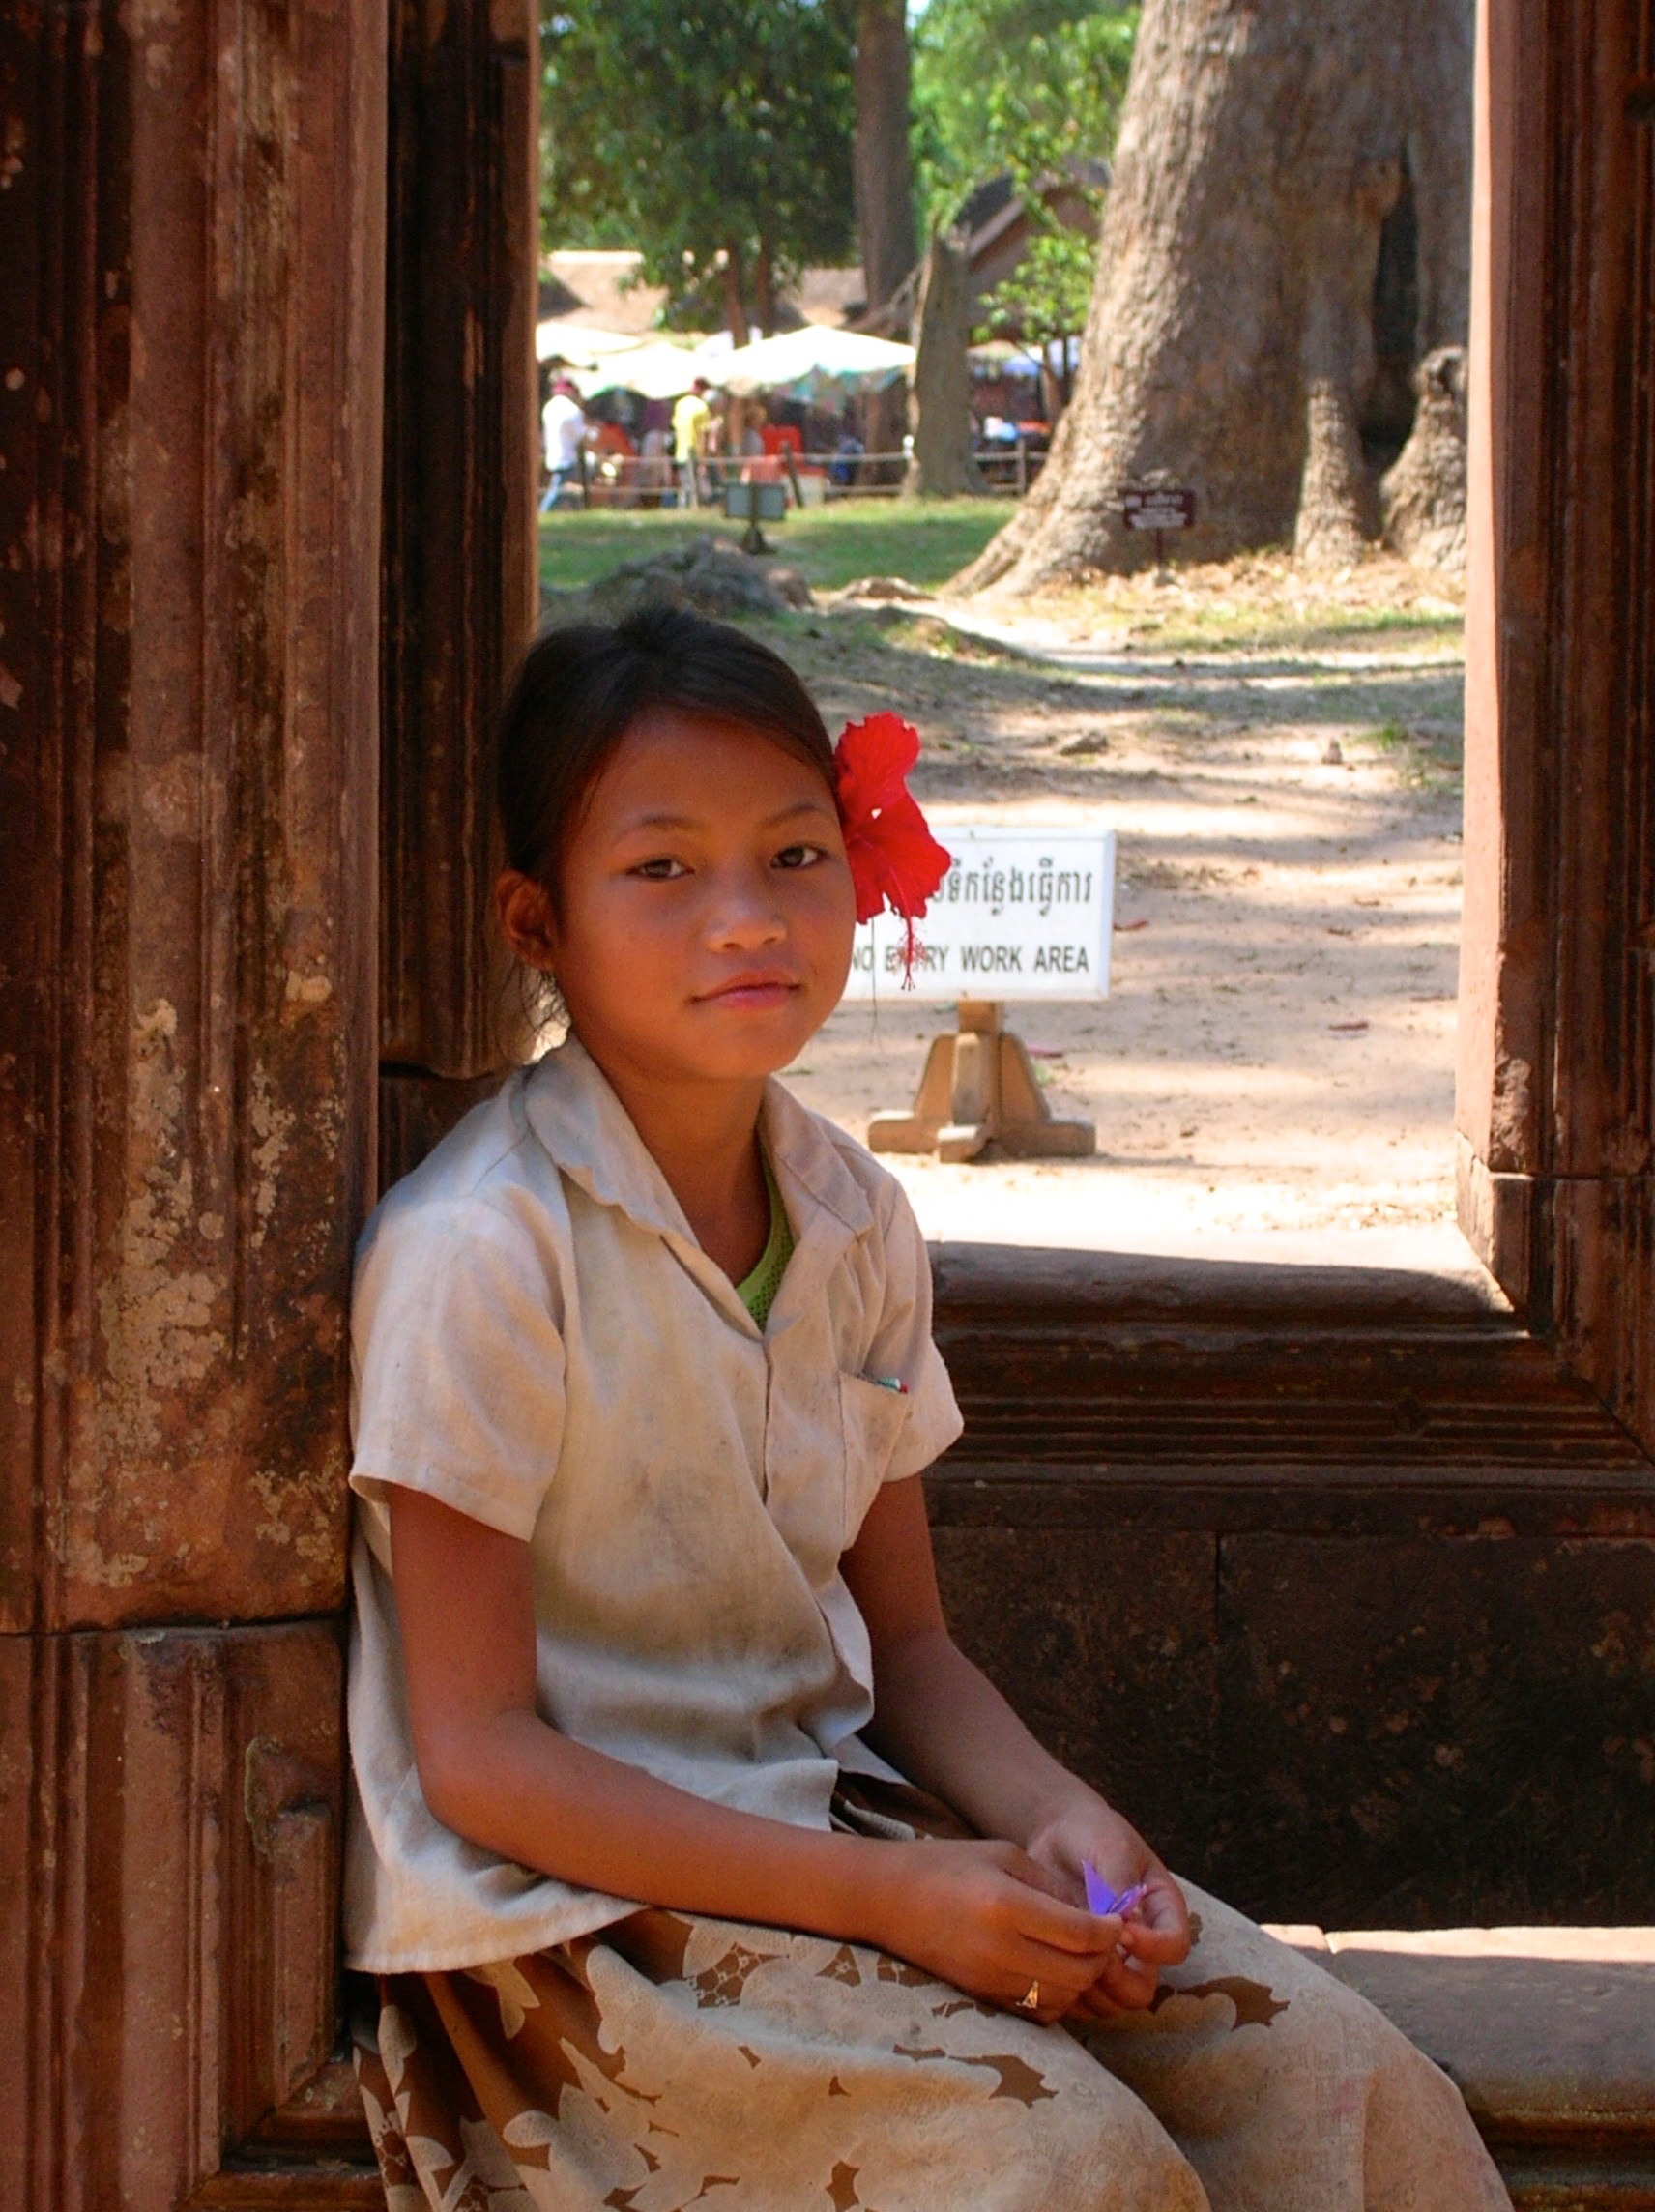 Cambodia's beautiful children. Photos by Marla Norman.